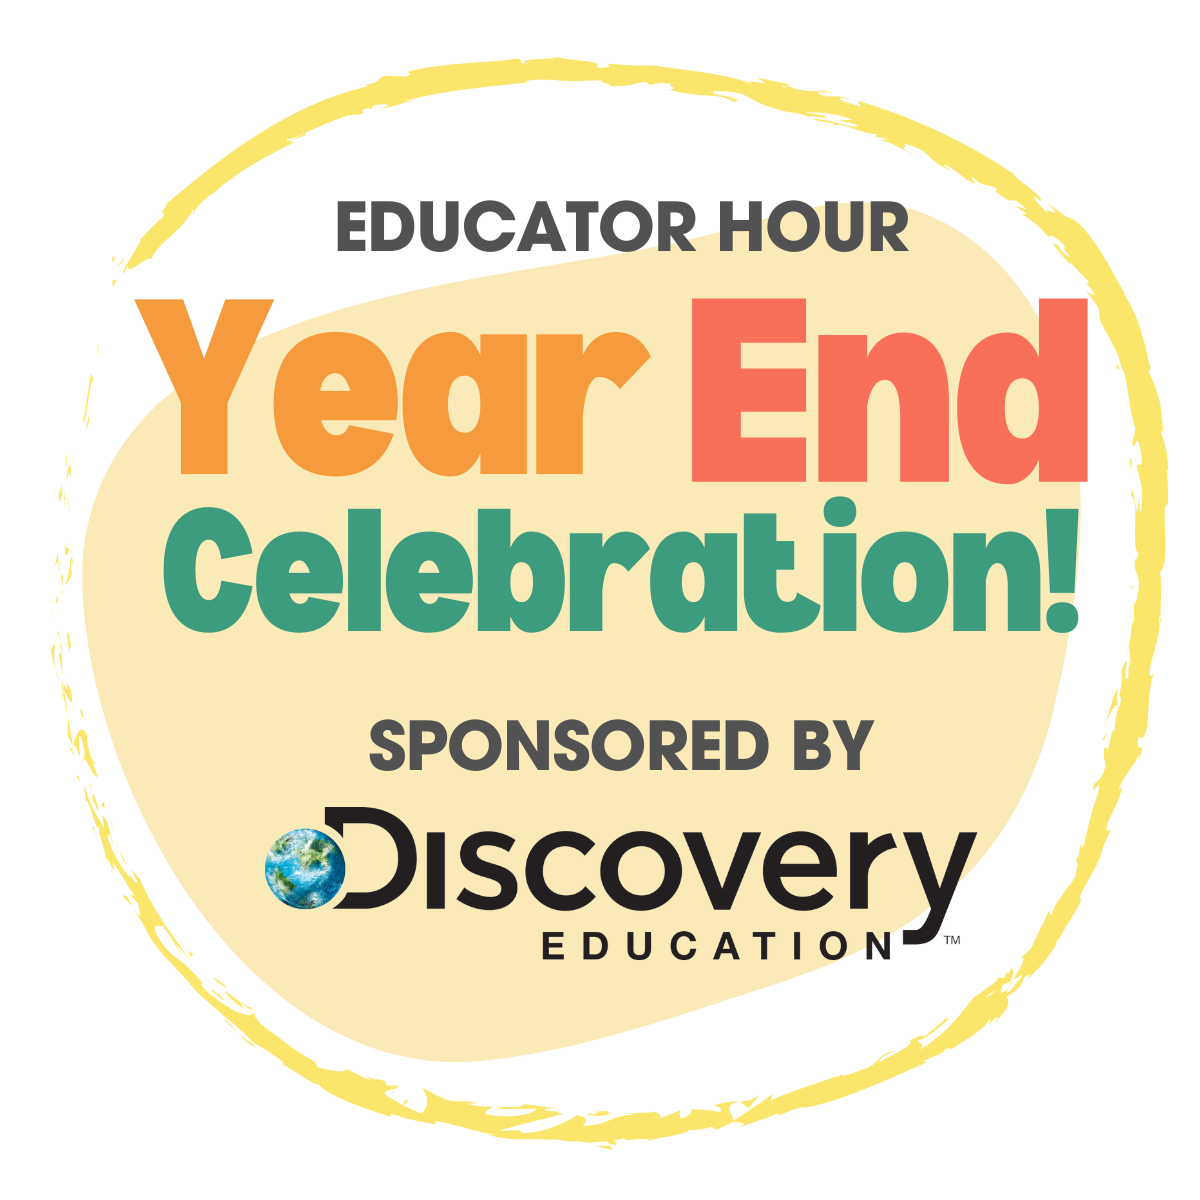 June 6 Educator Hour Celebration